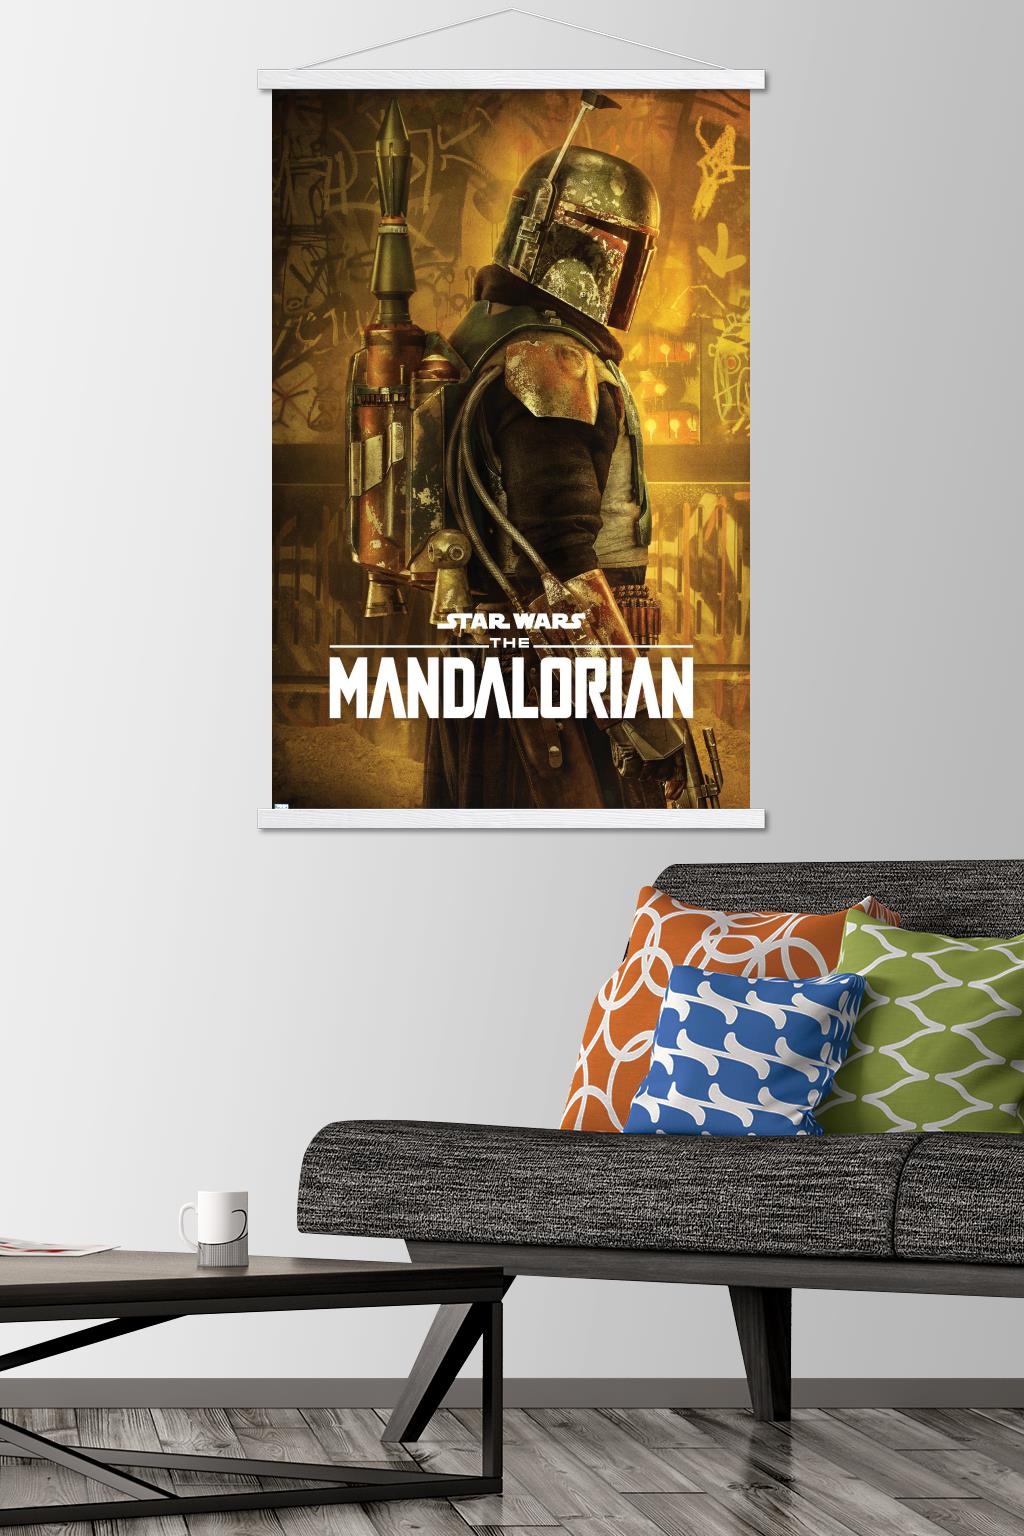 Star Wars: The Mandalorian Season 2 - Boba Fett 24" x 40" Poster by Trends International - image 2 of 3